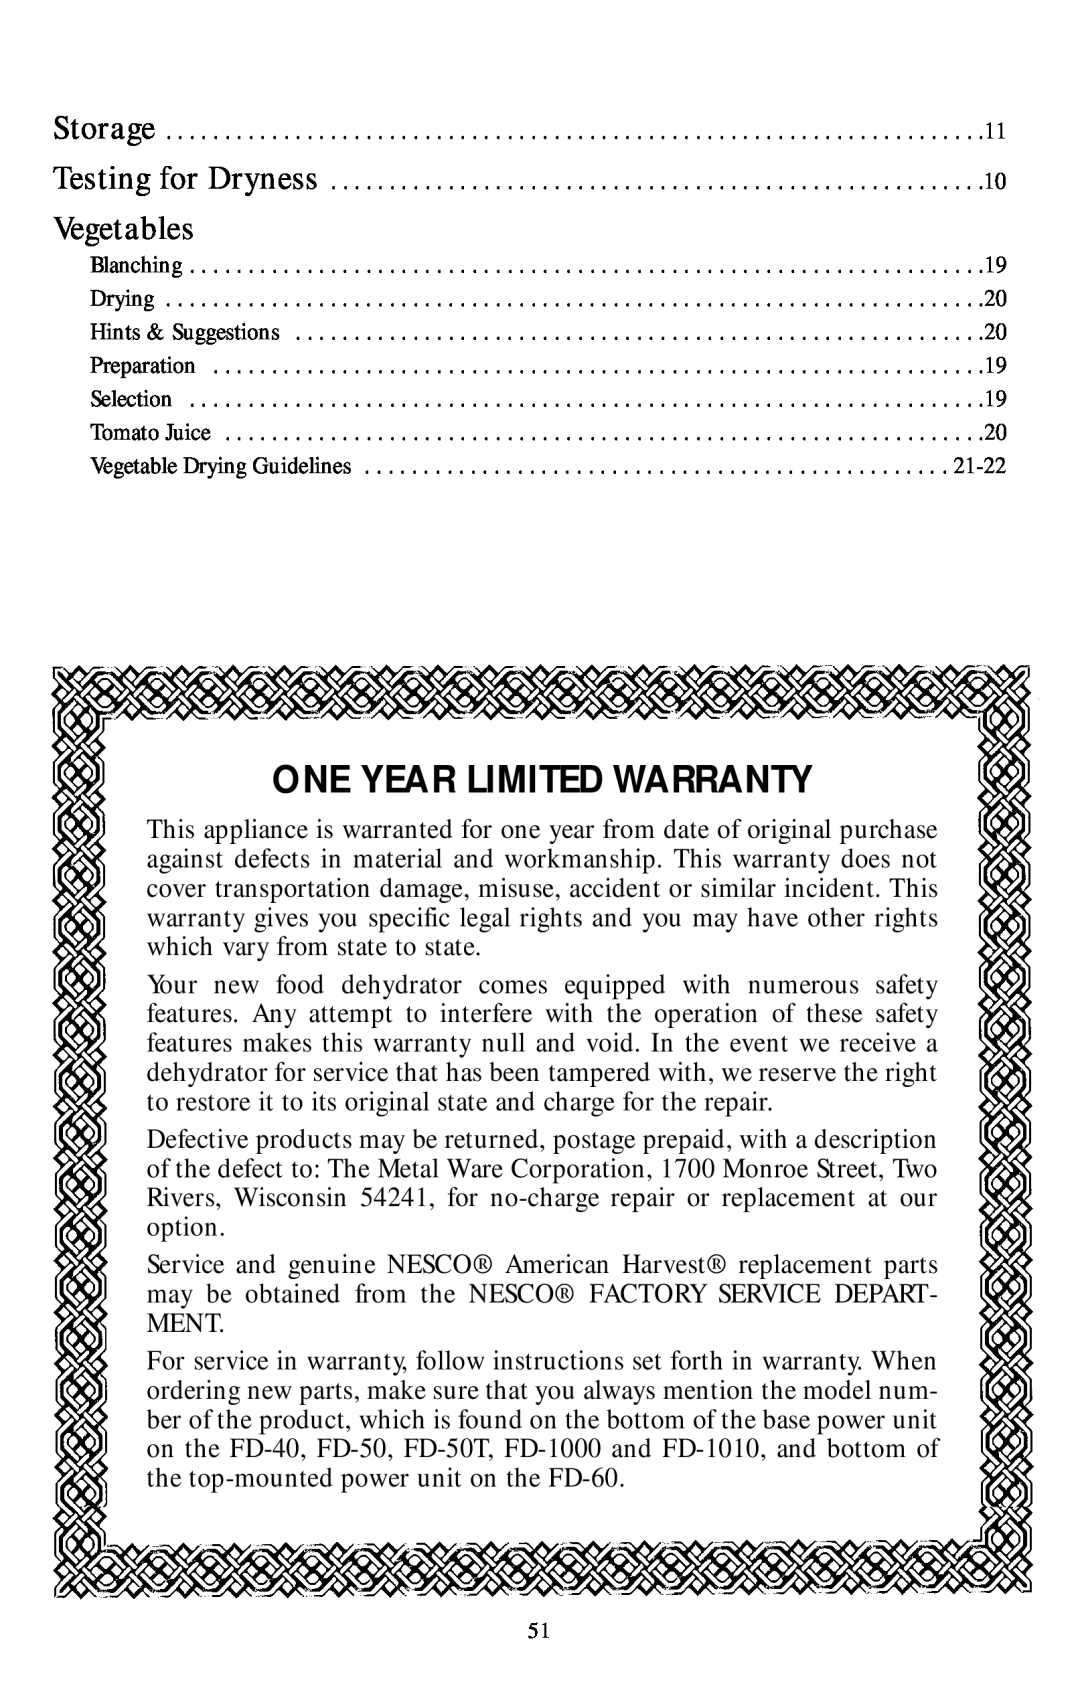 Nesco Food Dehydrator manual One Year Limited Warranty, Vegetables 